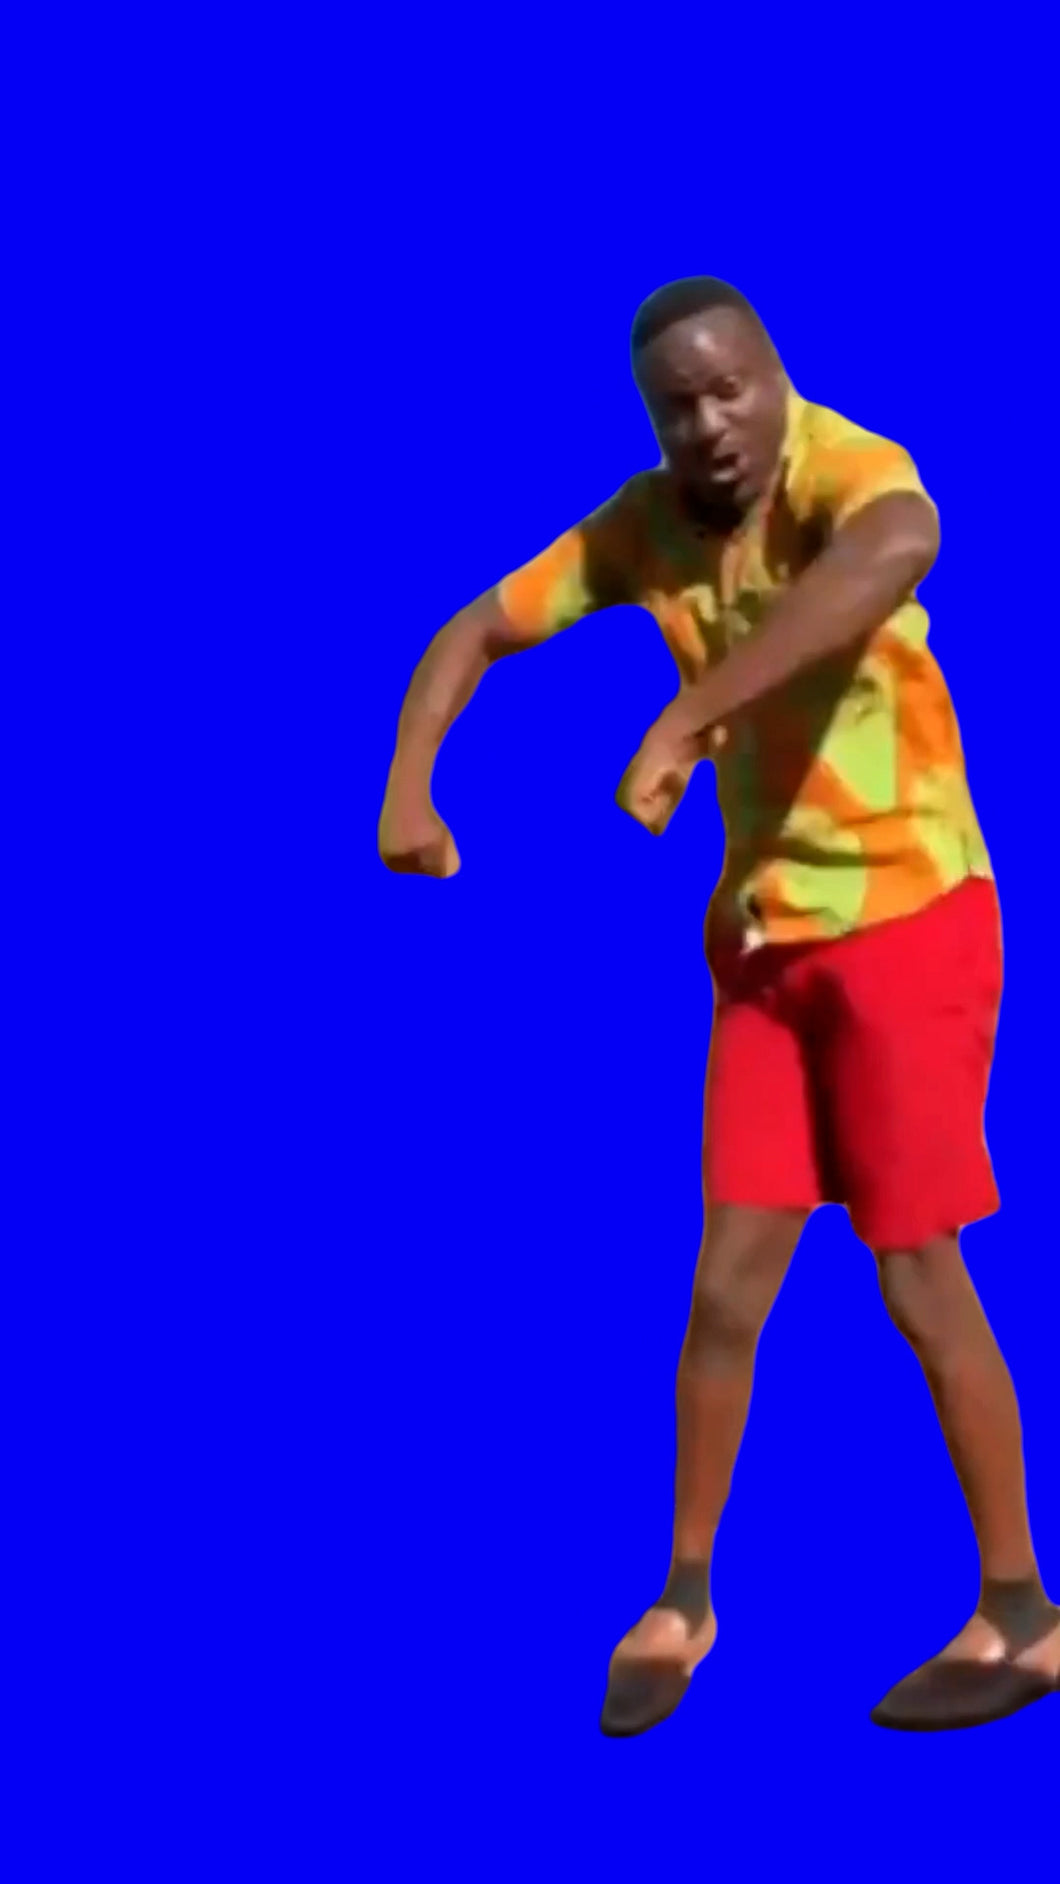 Go Mufasa Dance Meme (Blue Screen)